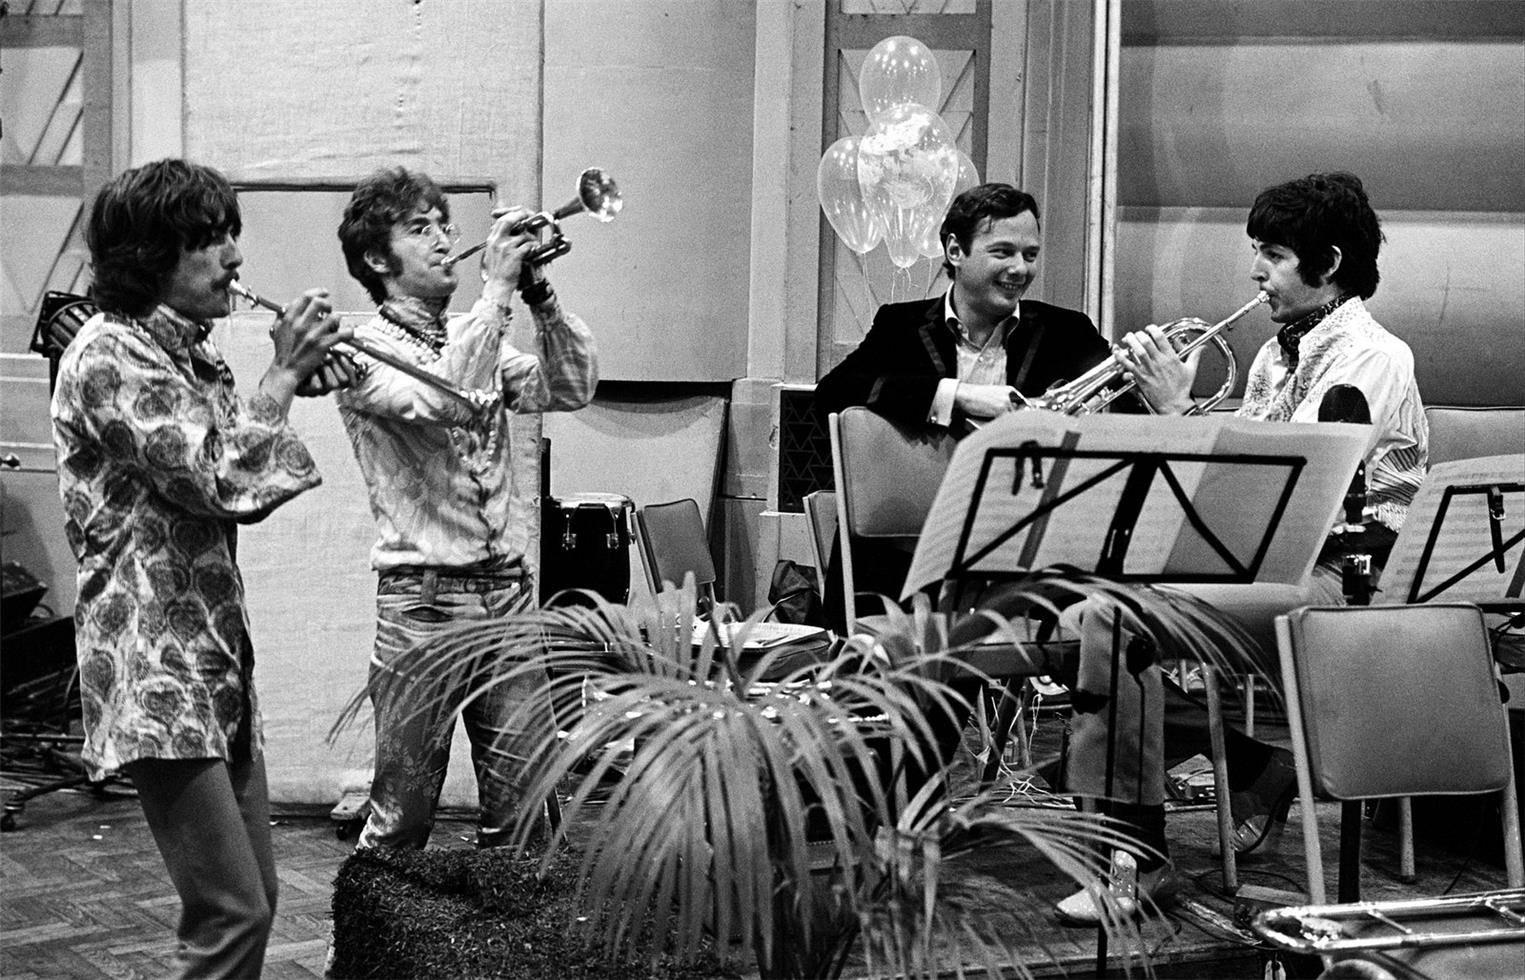 David Mangus Black and White Photograph - George Harrison, John Lennon, Paul McCartney, and Brian Epstein, 1967